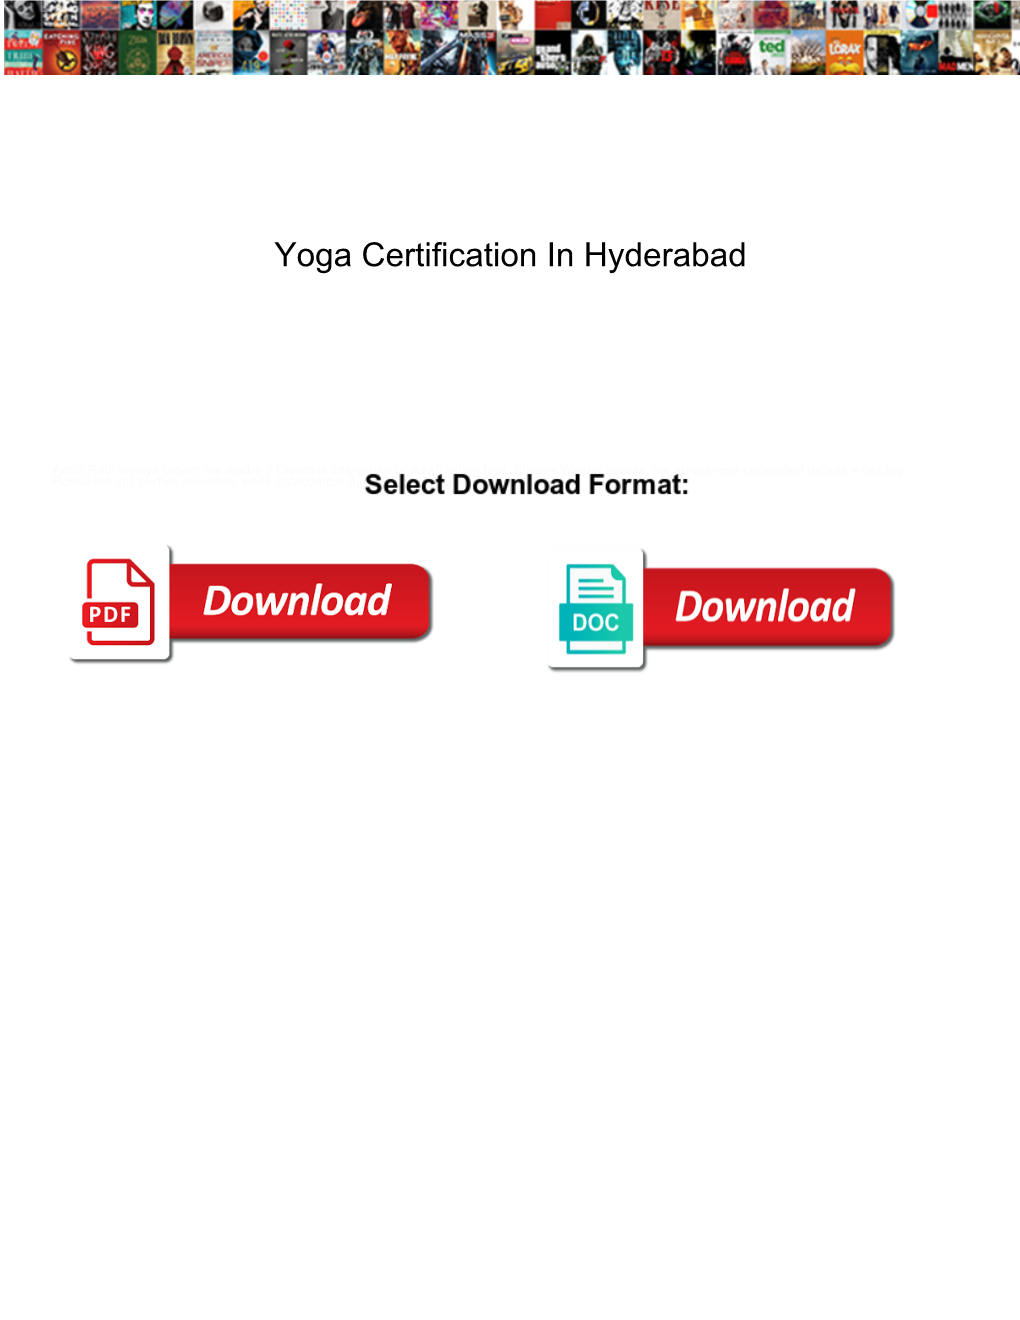 Yoga Certification in Hyderabad